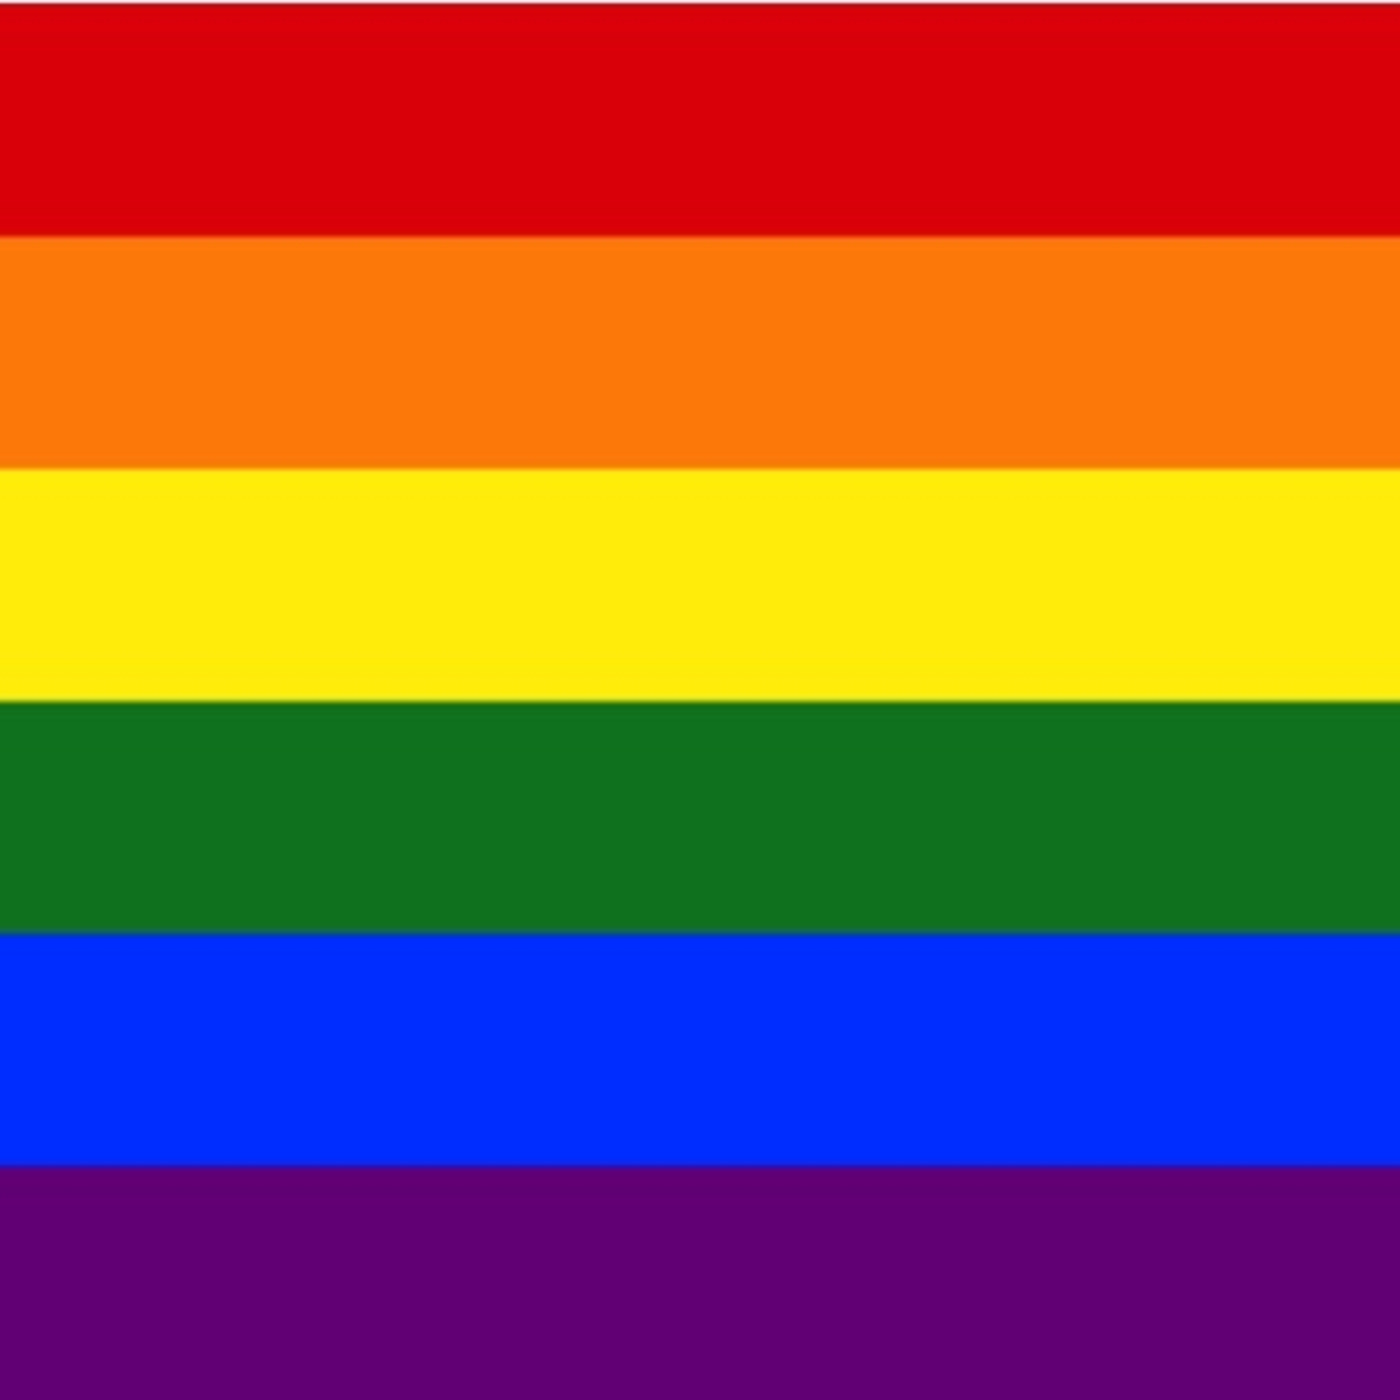 Episode 11: "We needed something beautiful”. Storia della bandiera arcobaleno